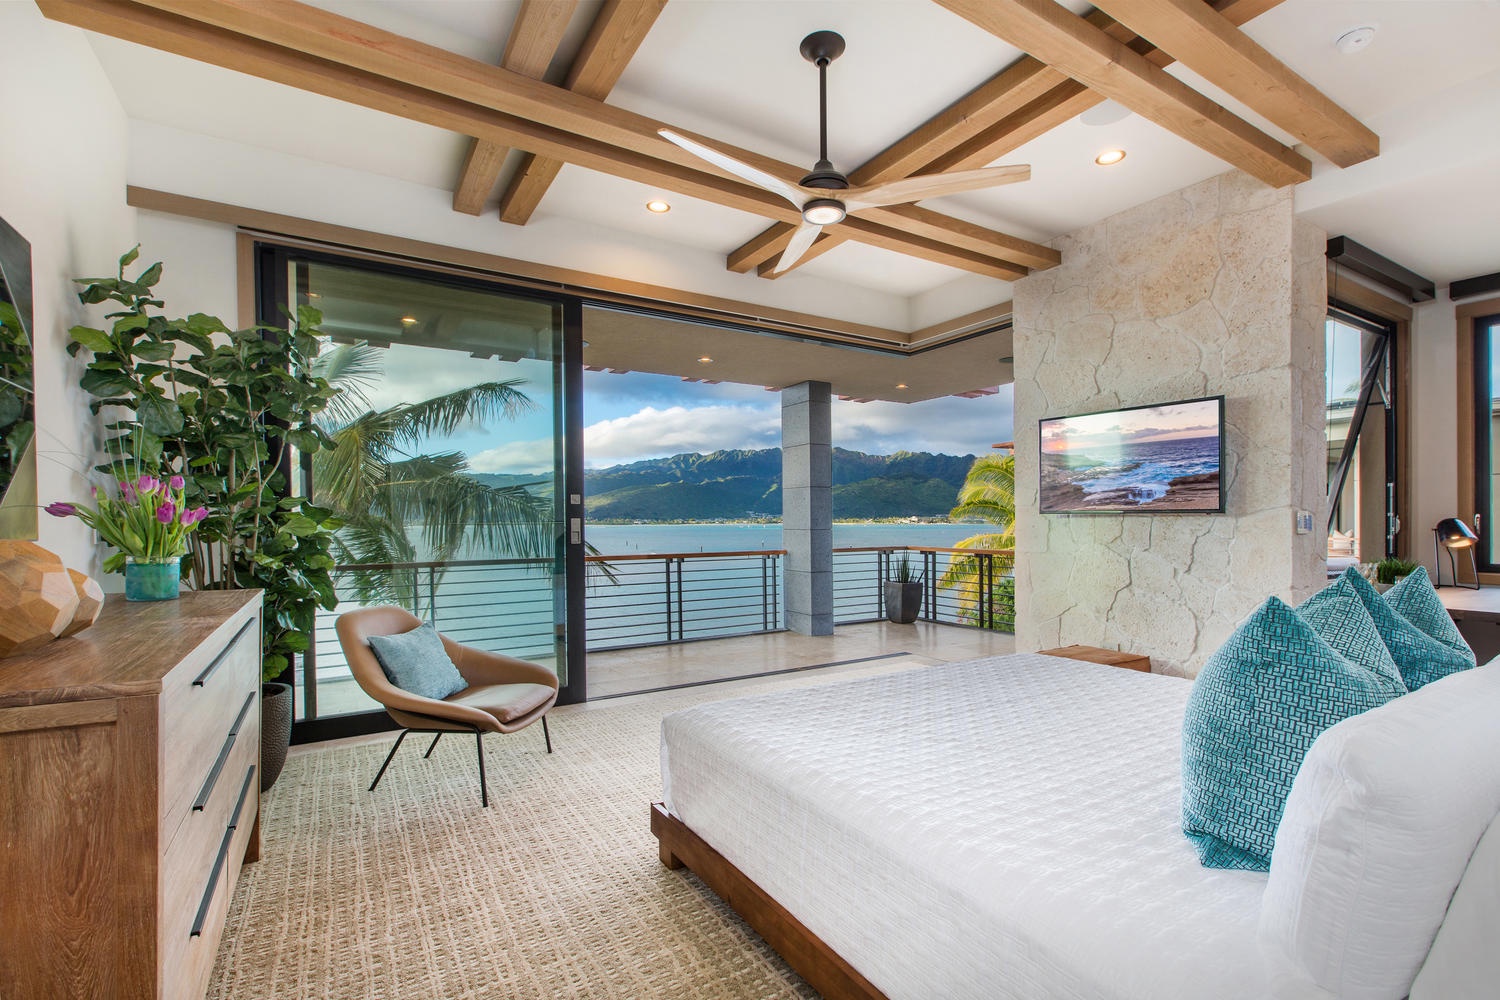 Honolulu Vacation Rentals, Ocean House 4 Bedroom - Second primary bedroom suite